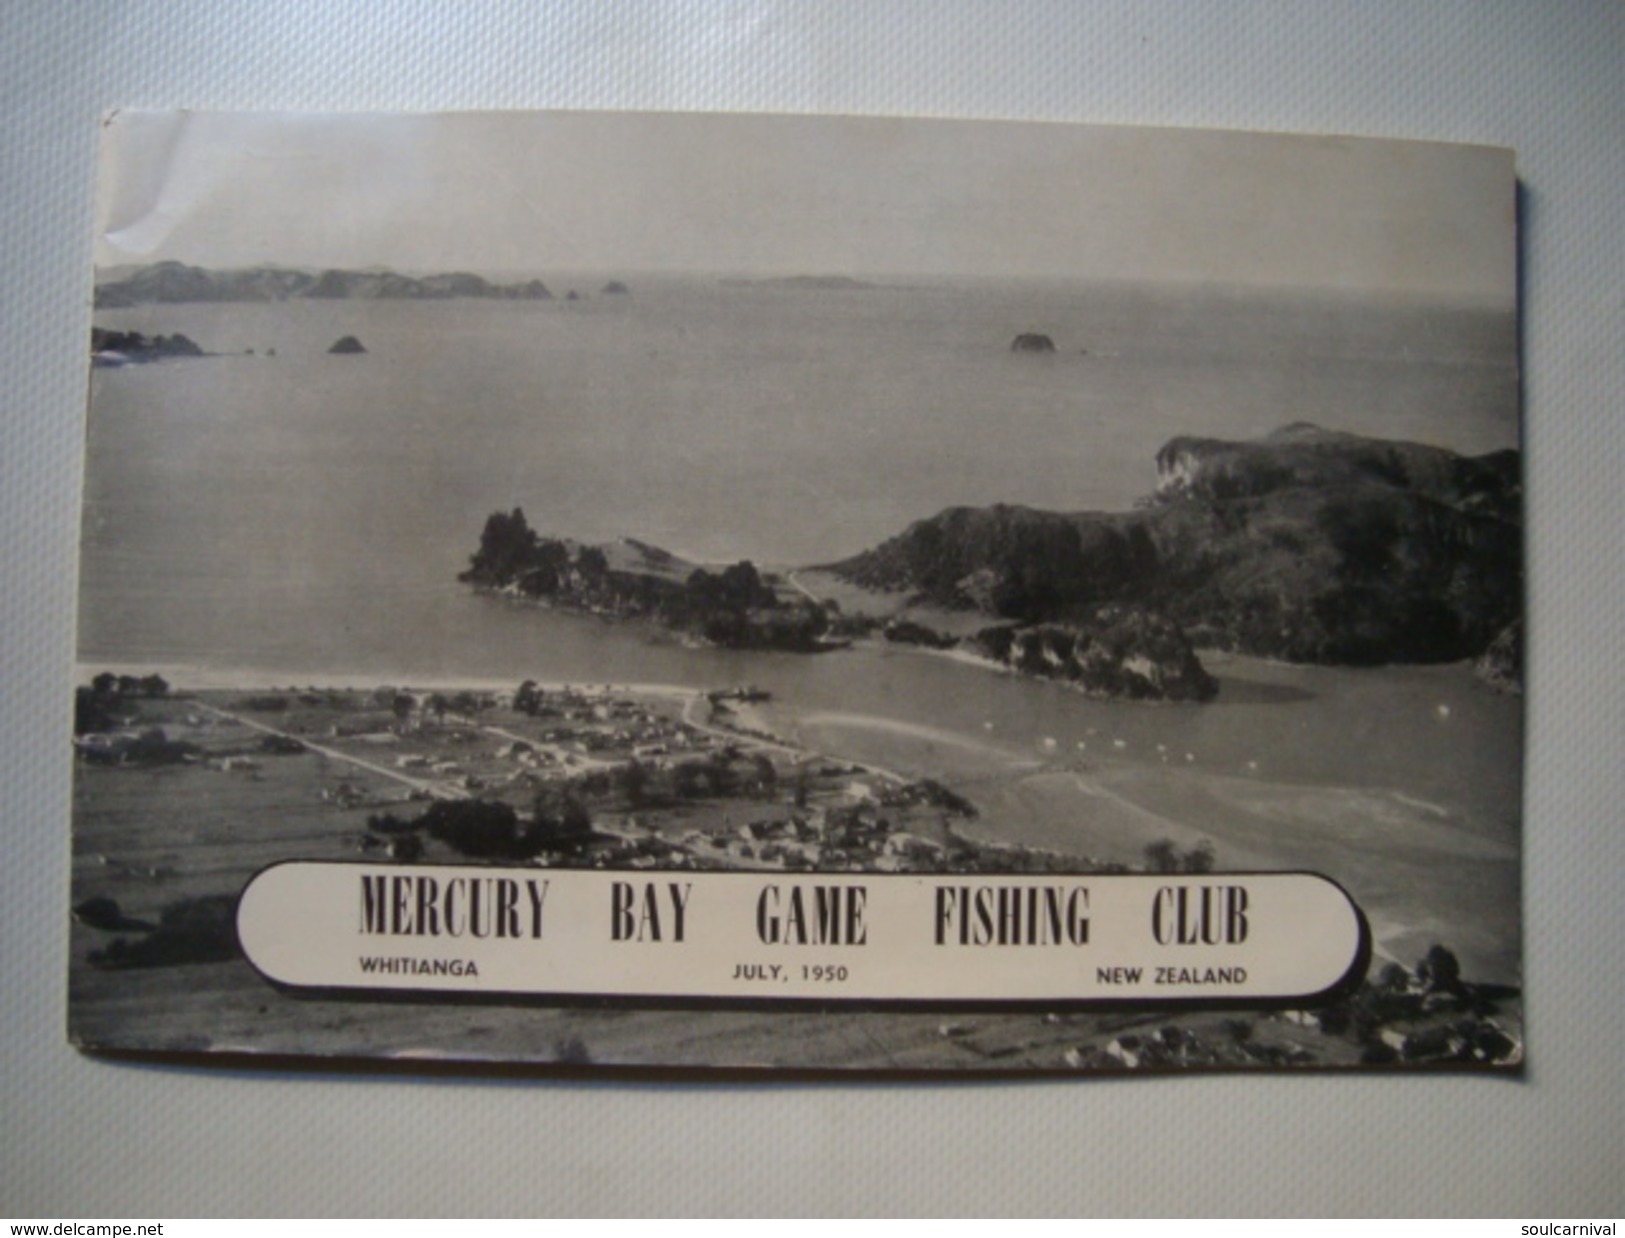 MERCURY BAY GAME FISHING CLUB. WHITIANGA, NEW ZEALAND - 1950. 42 PAGES. B/W PHOTOS. - Pêche